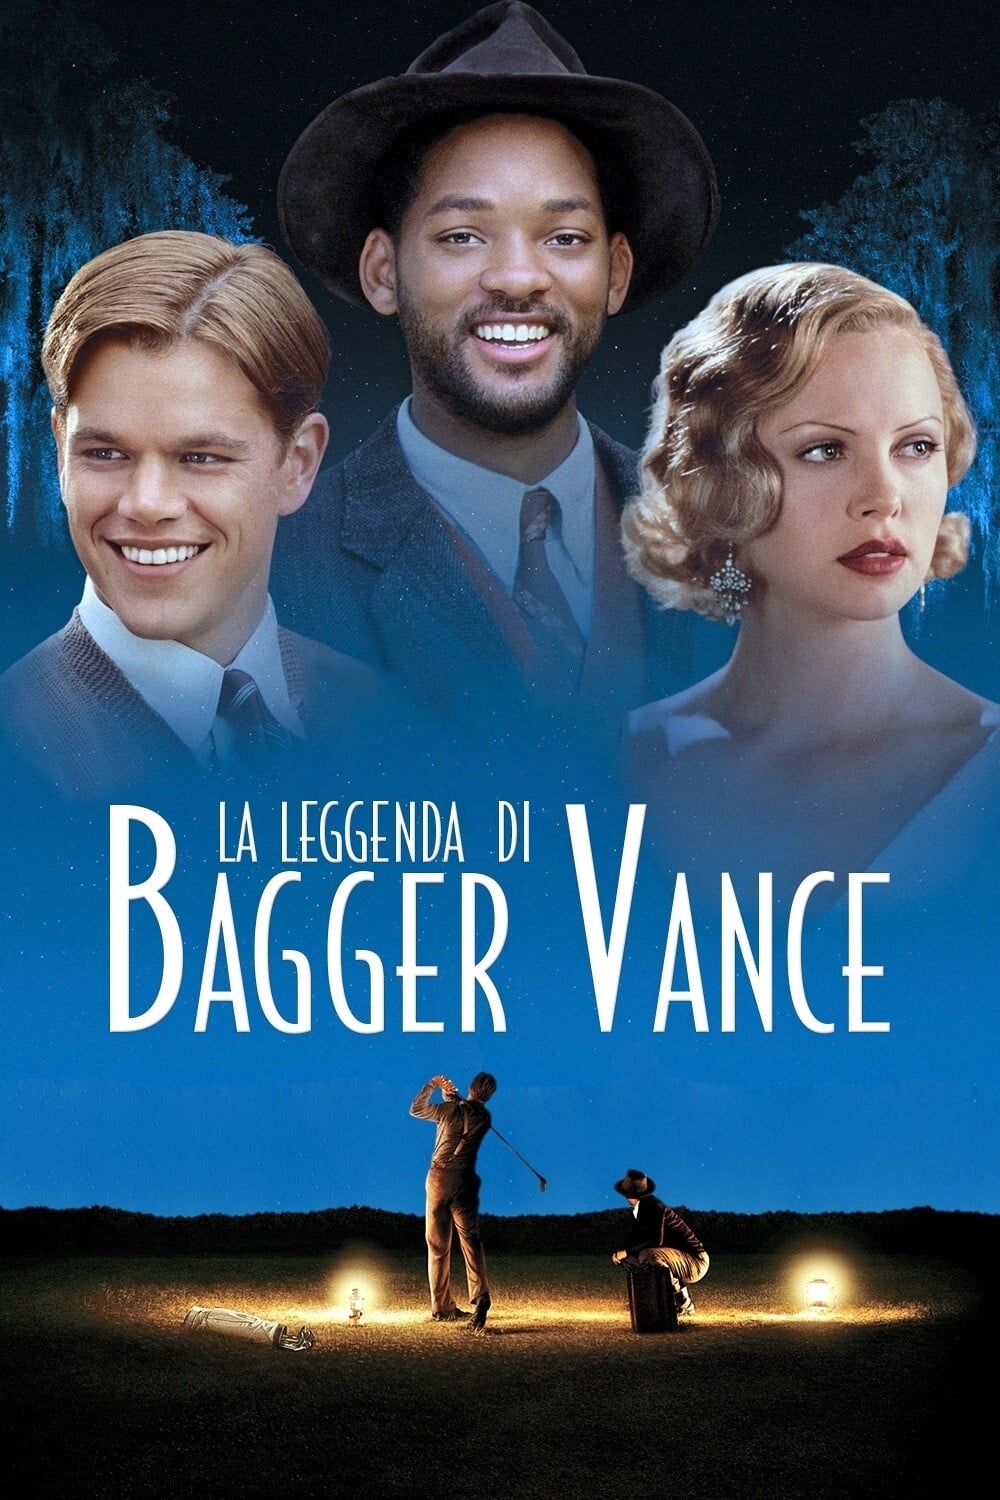 La leggenda di Bagger Vance [HD] (2000)